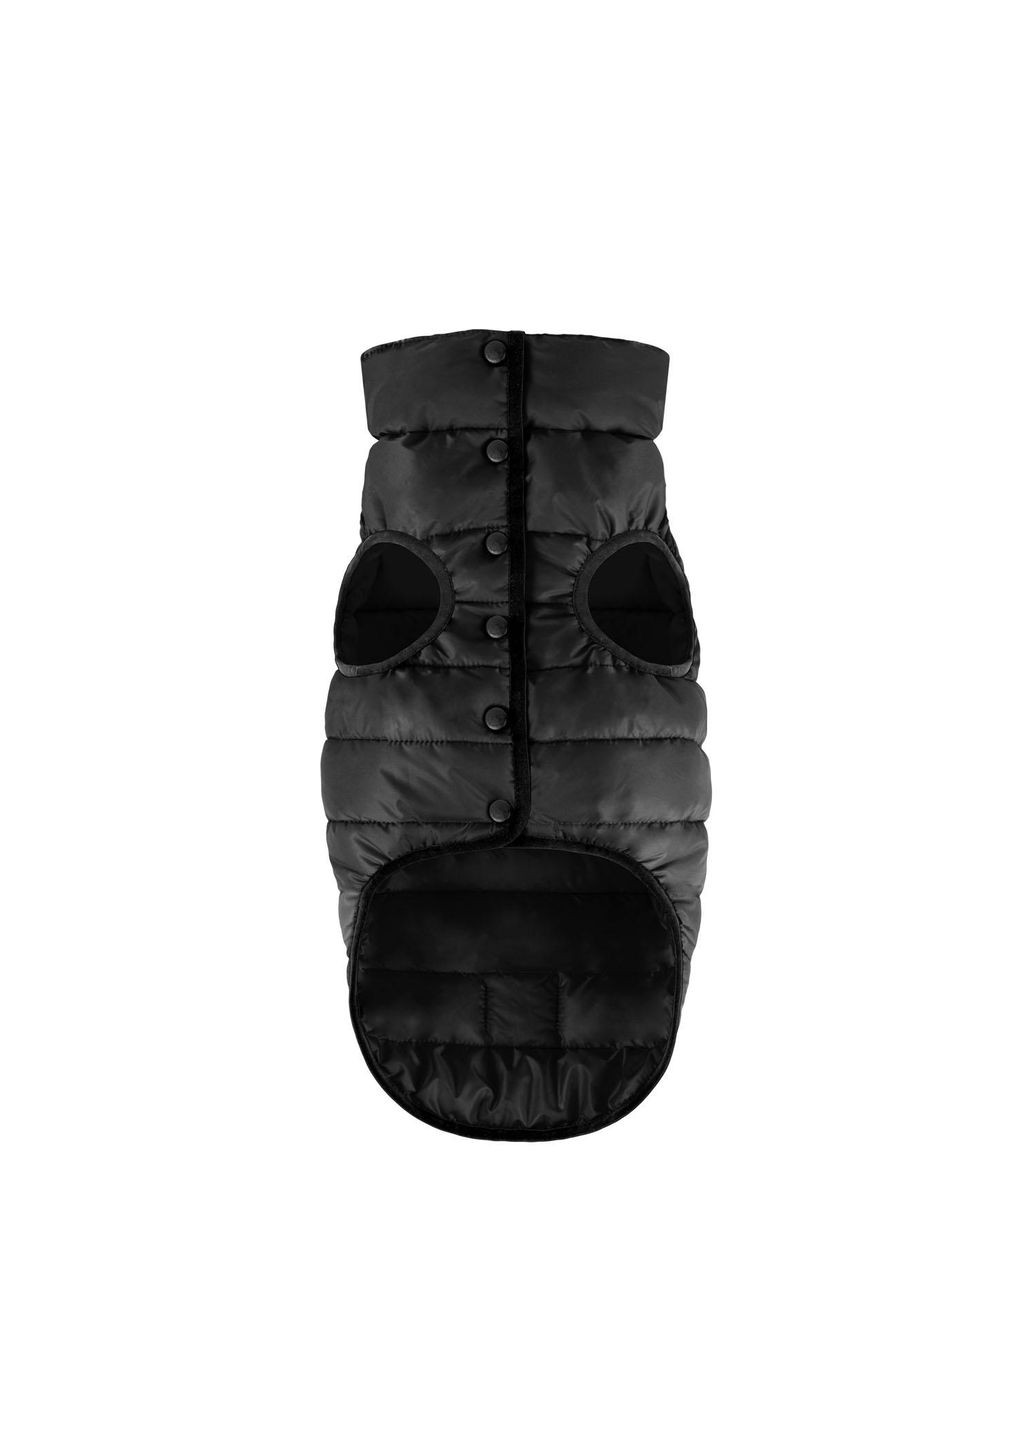 Односторонняя курточка AiryVest ONE для собак черная, размер XS30 (20631) Airy Vest (279572266)